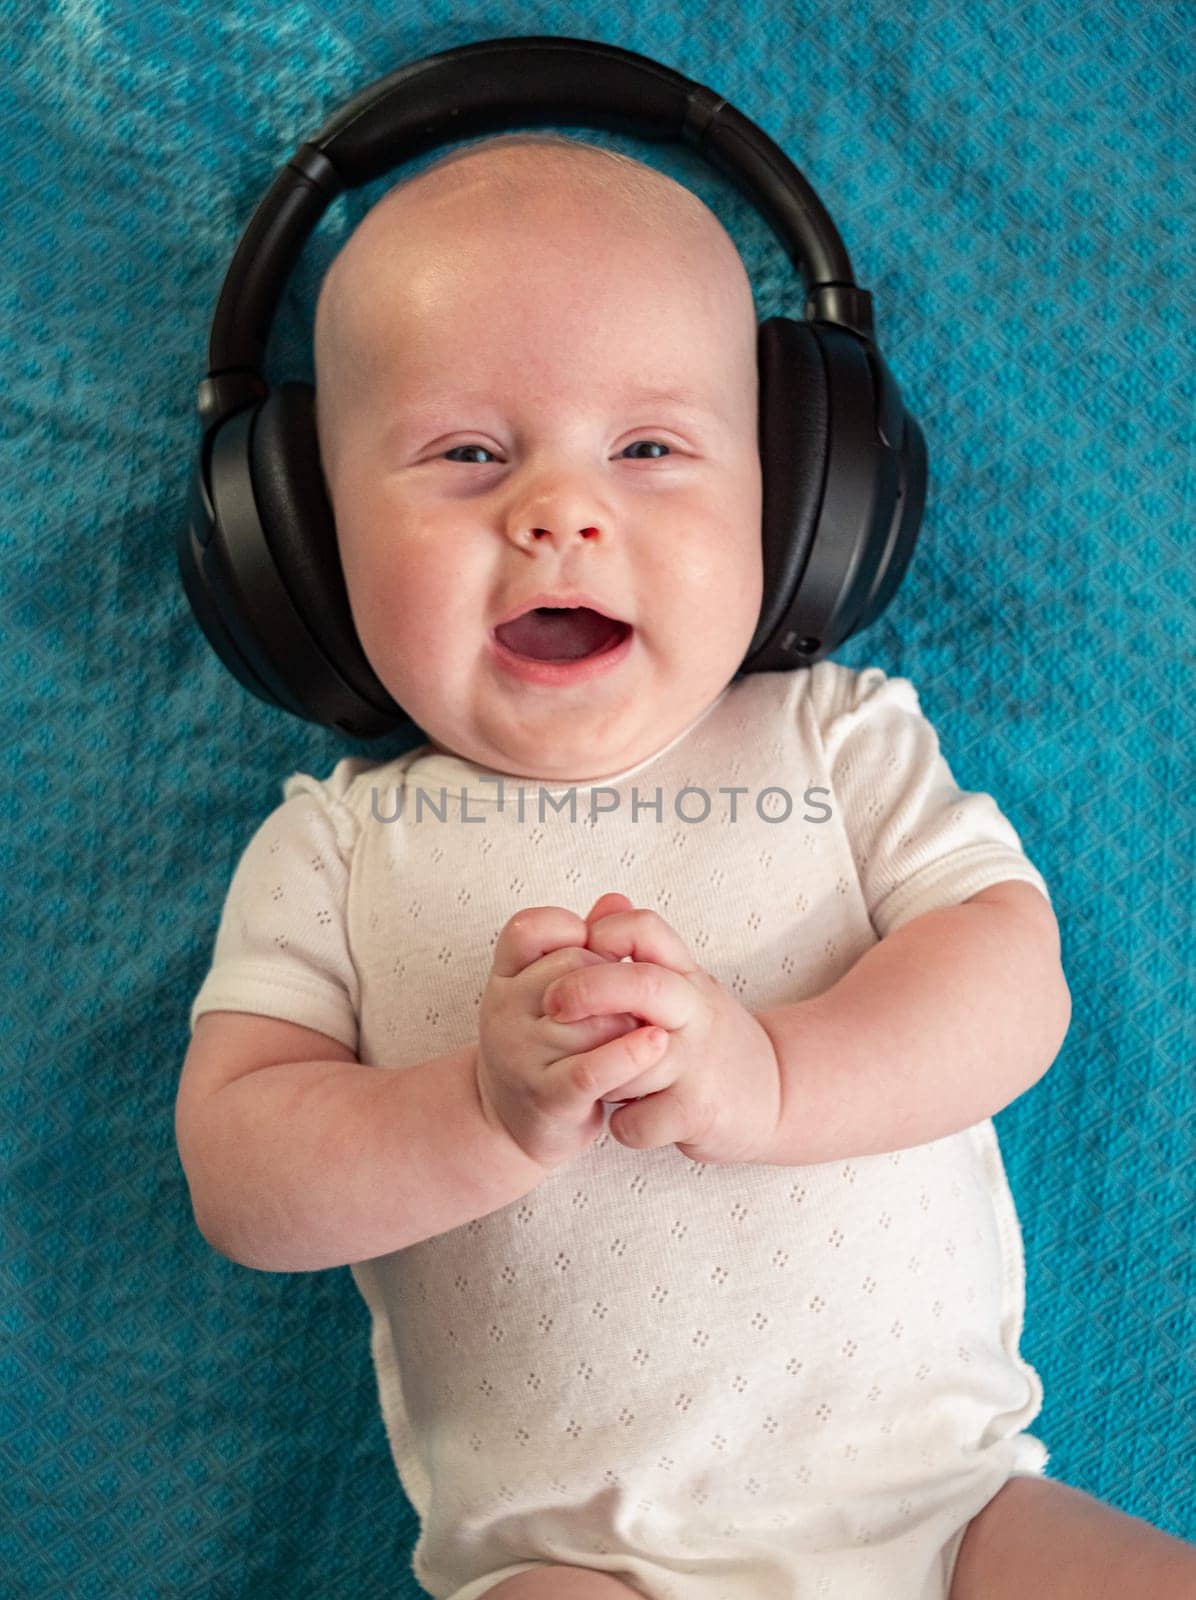 Little boy on blue blanket background with headphones